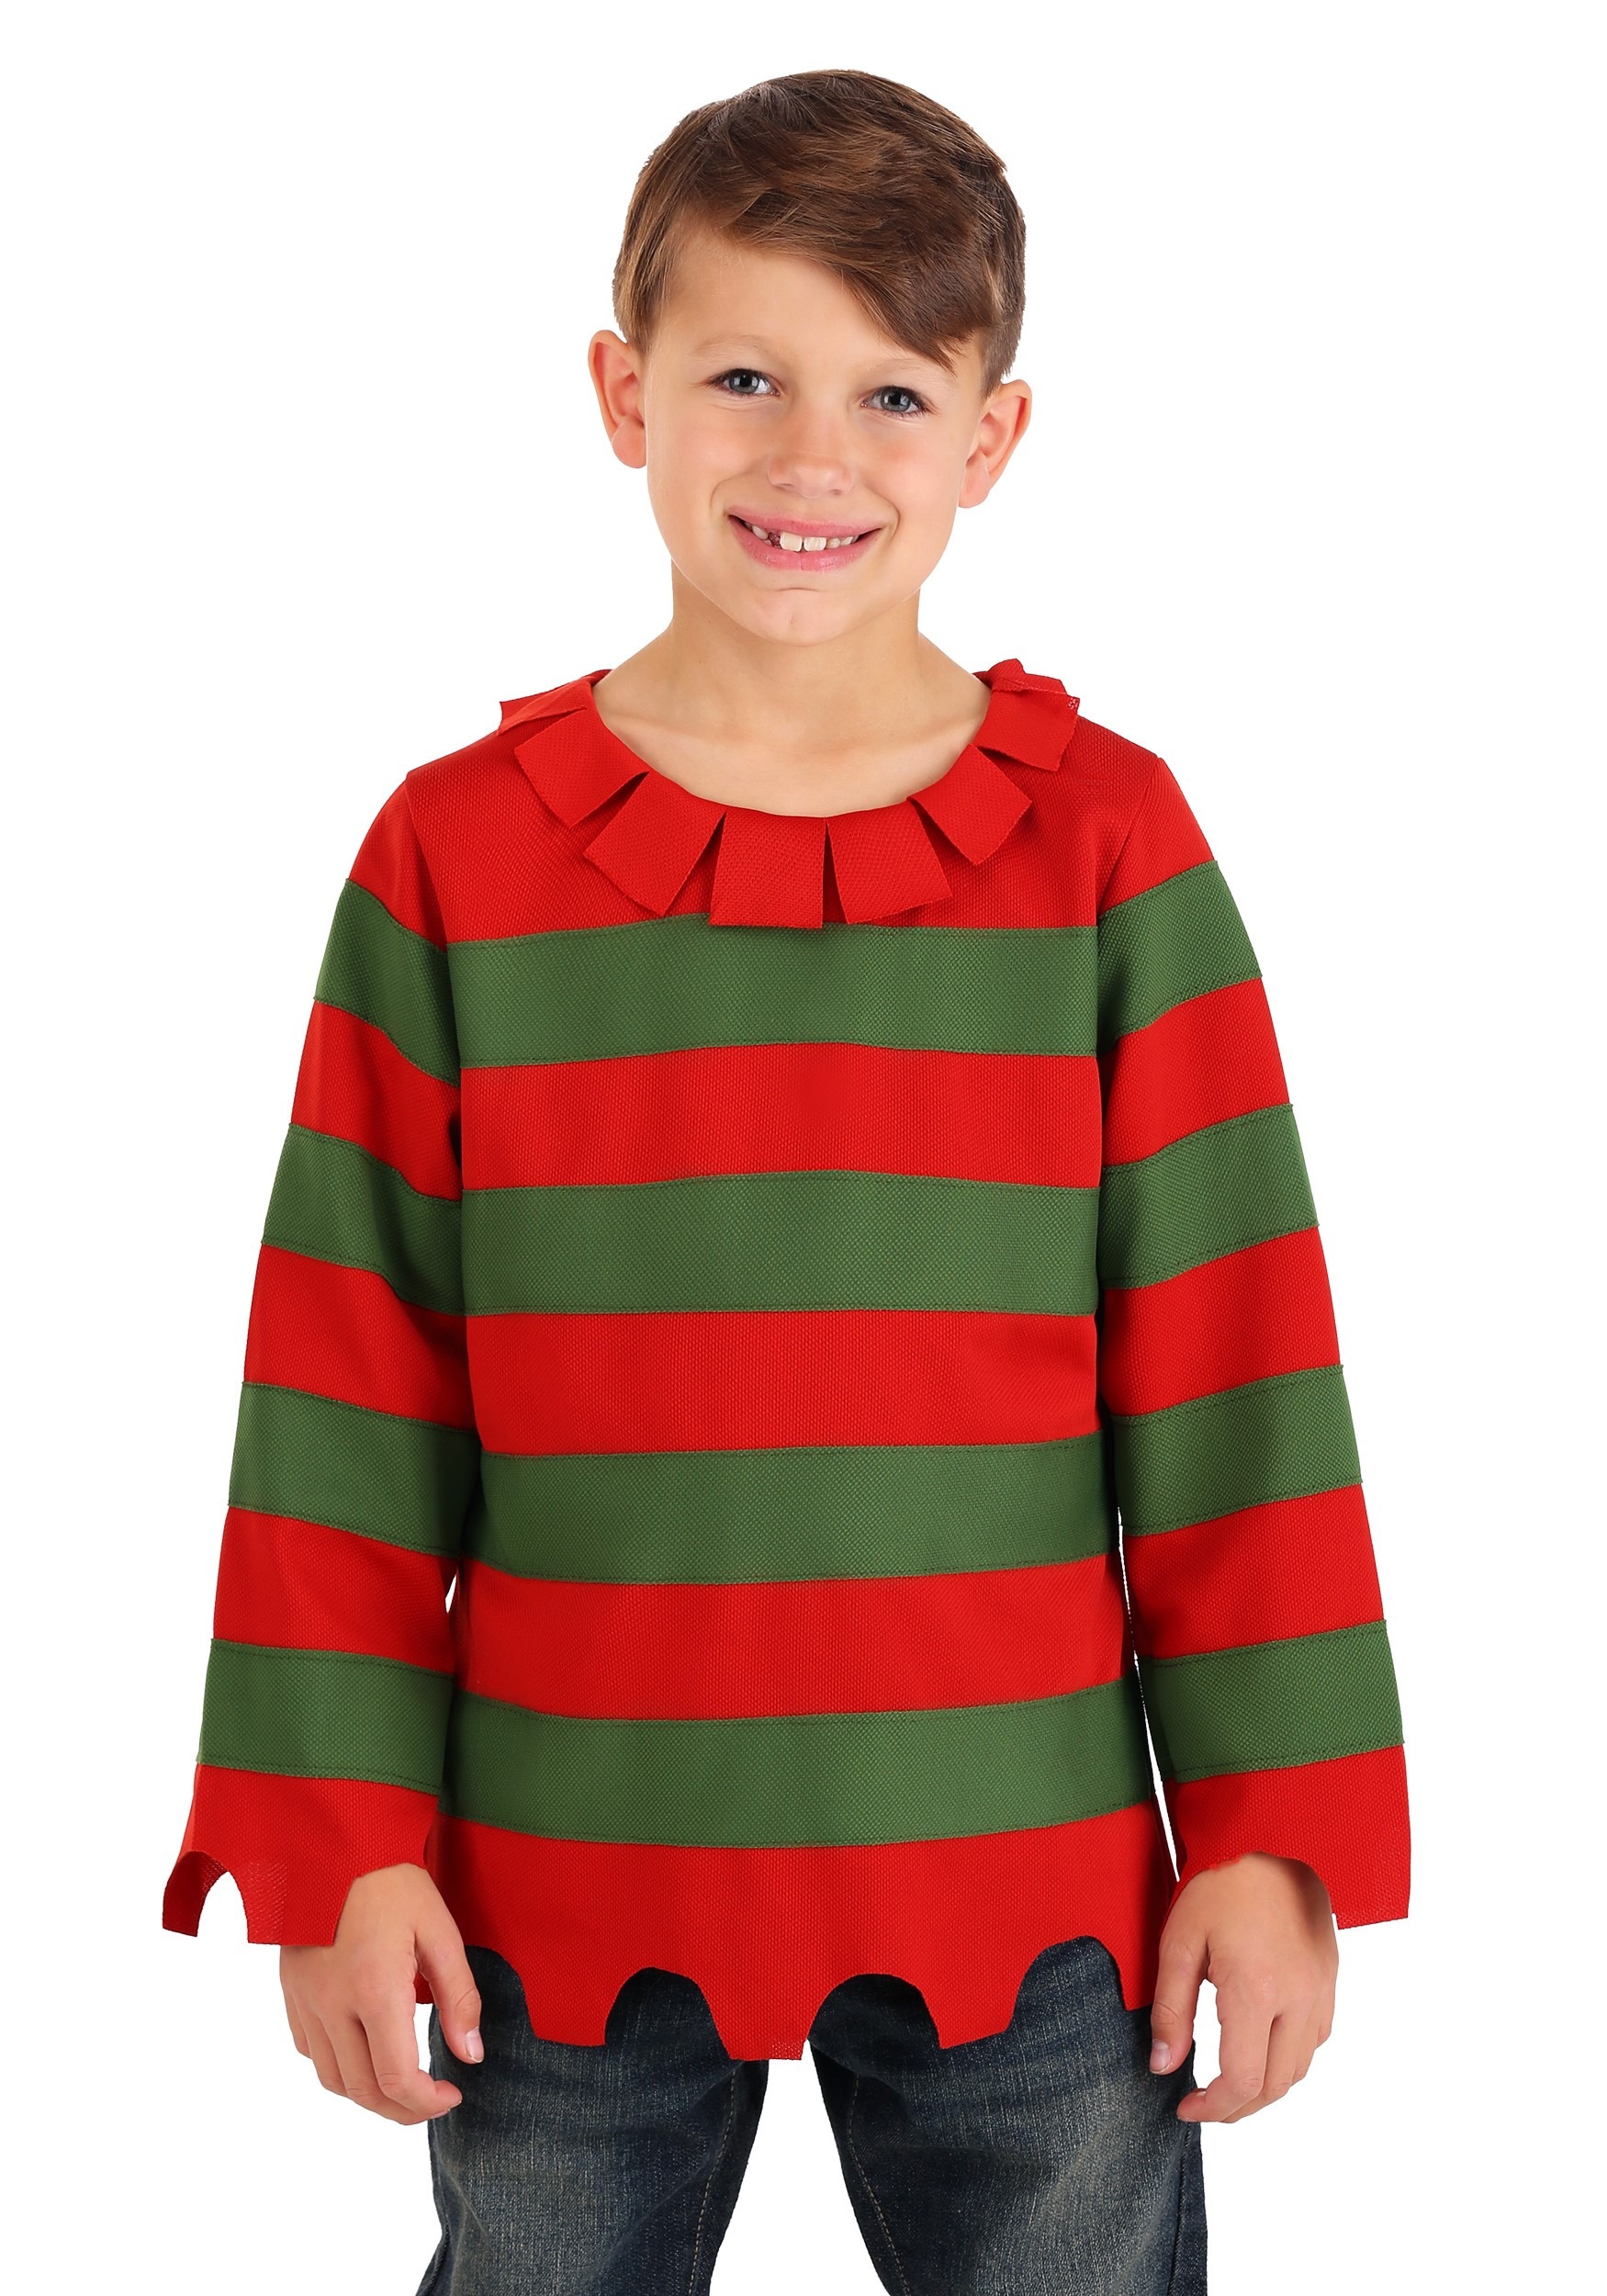 Nightmare Sweater Costume for Kids